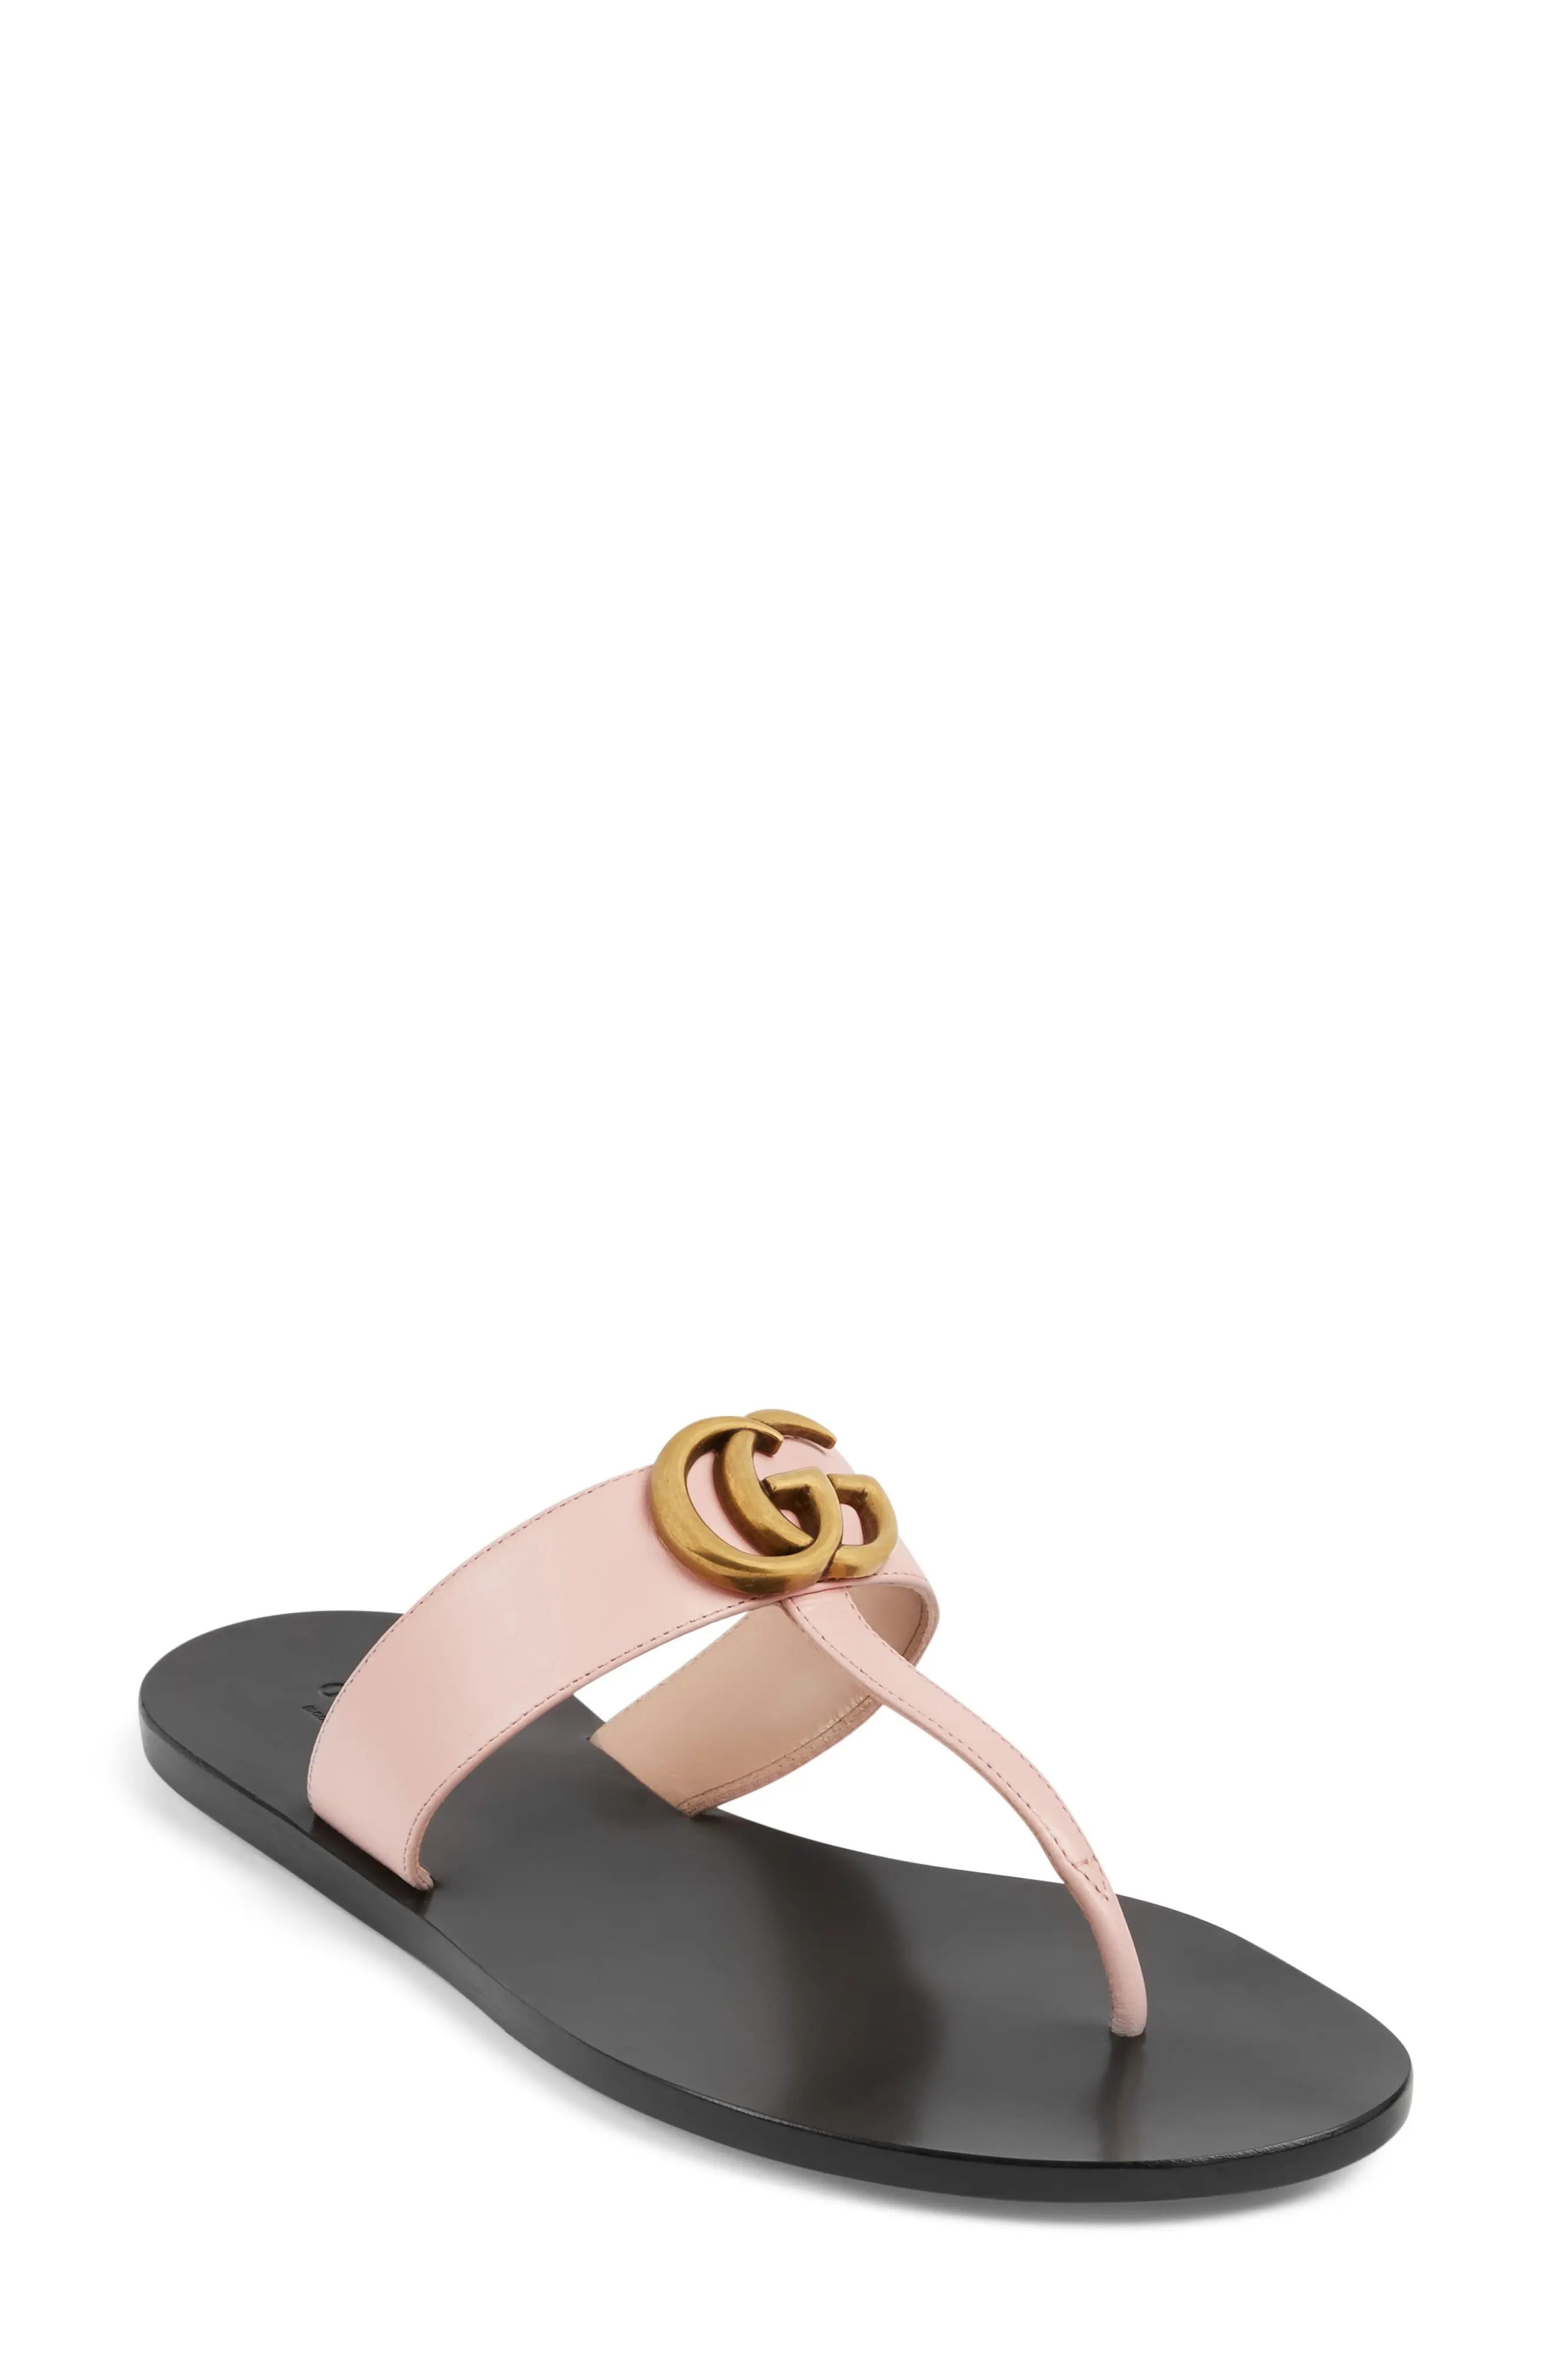 Women's Gucci Gg T-Strap Sandal, Size 8US / 38EU - Pink | Nordstrom